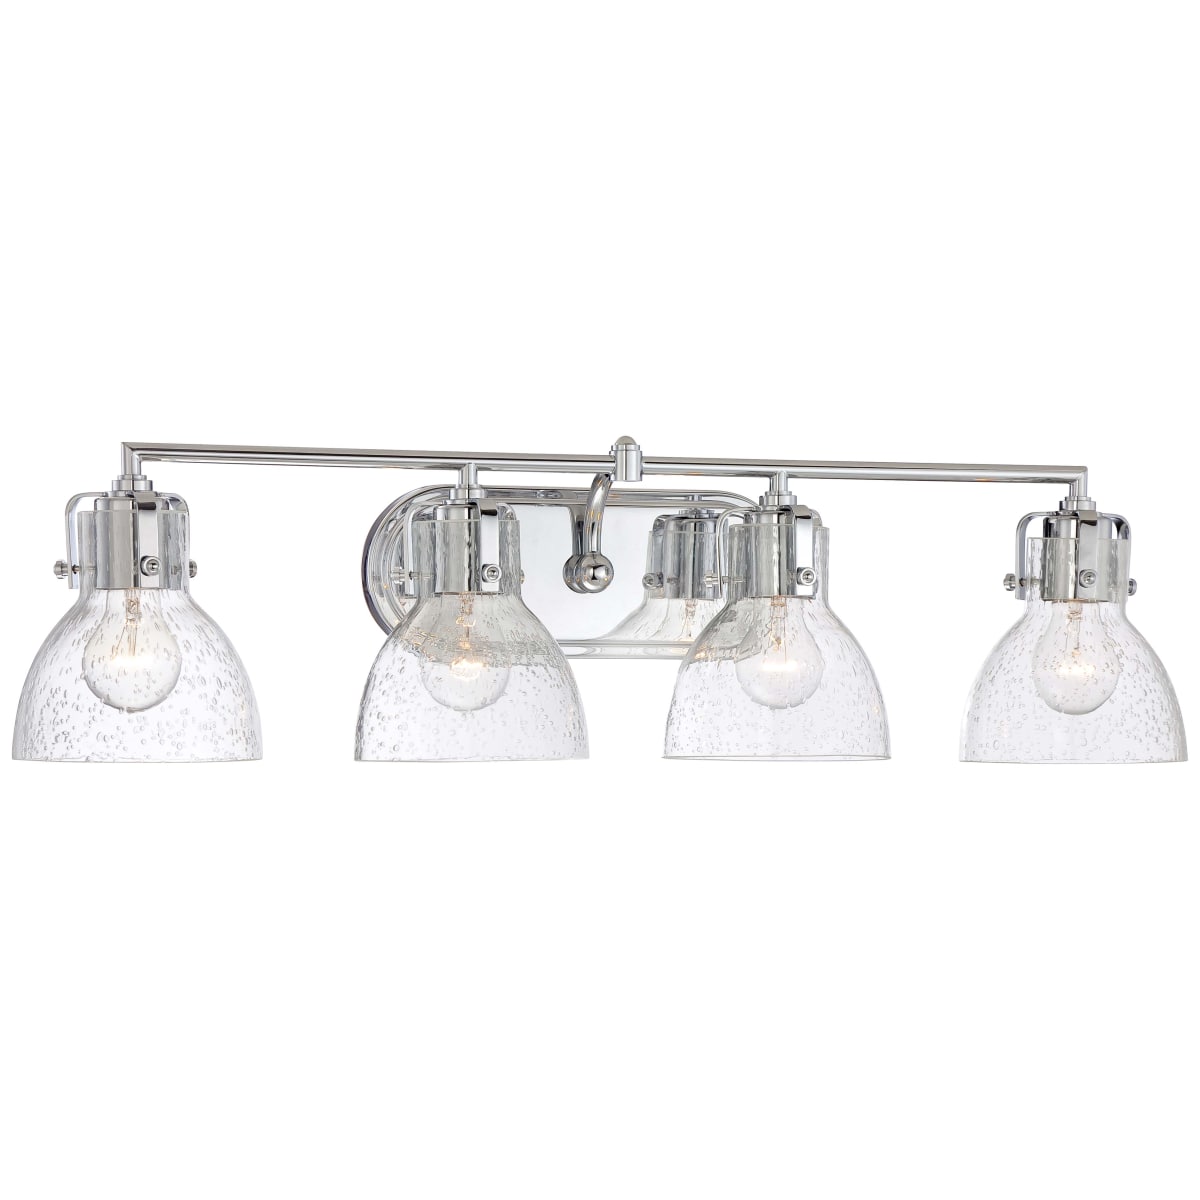 Minka Lavery 5723 Chrome 3 Light 23 Width Bathroom Vanity Light With Clear for sale online